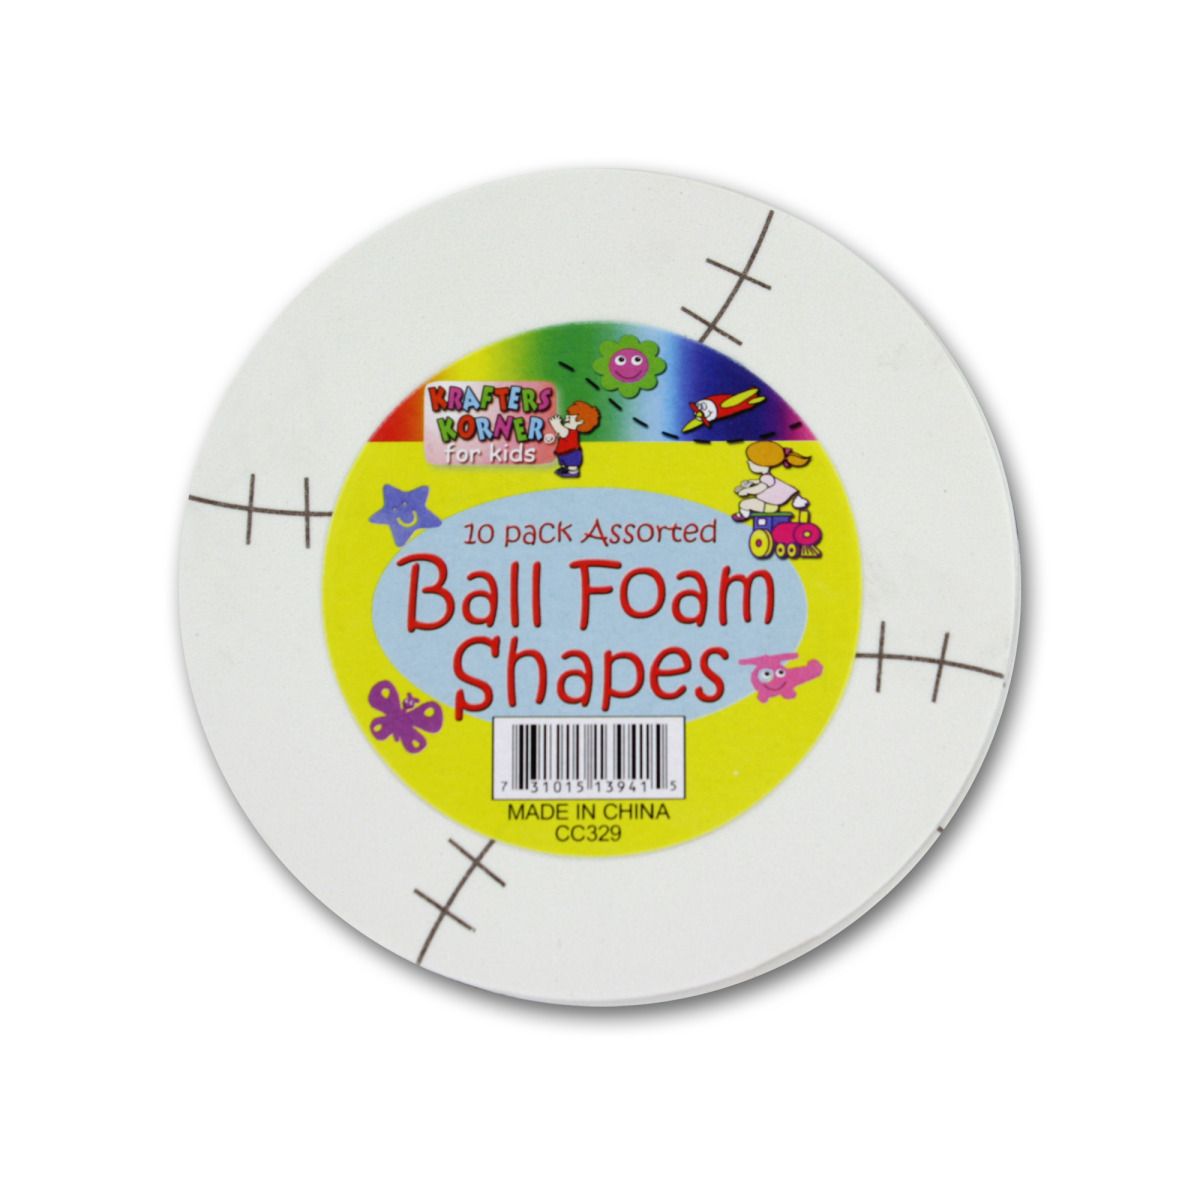 New Wholesale Lot 72 Sports Ball Foam Shapes Craft Fun